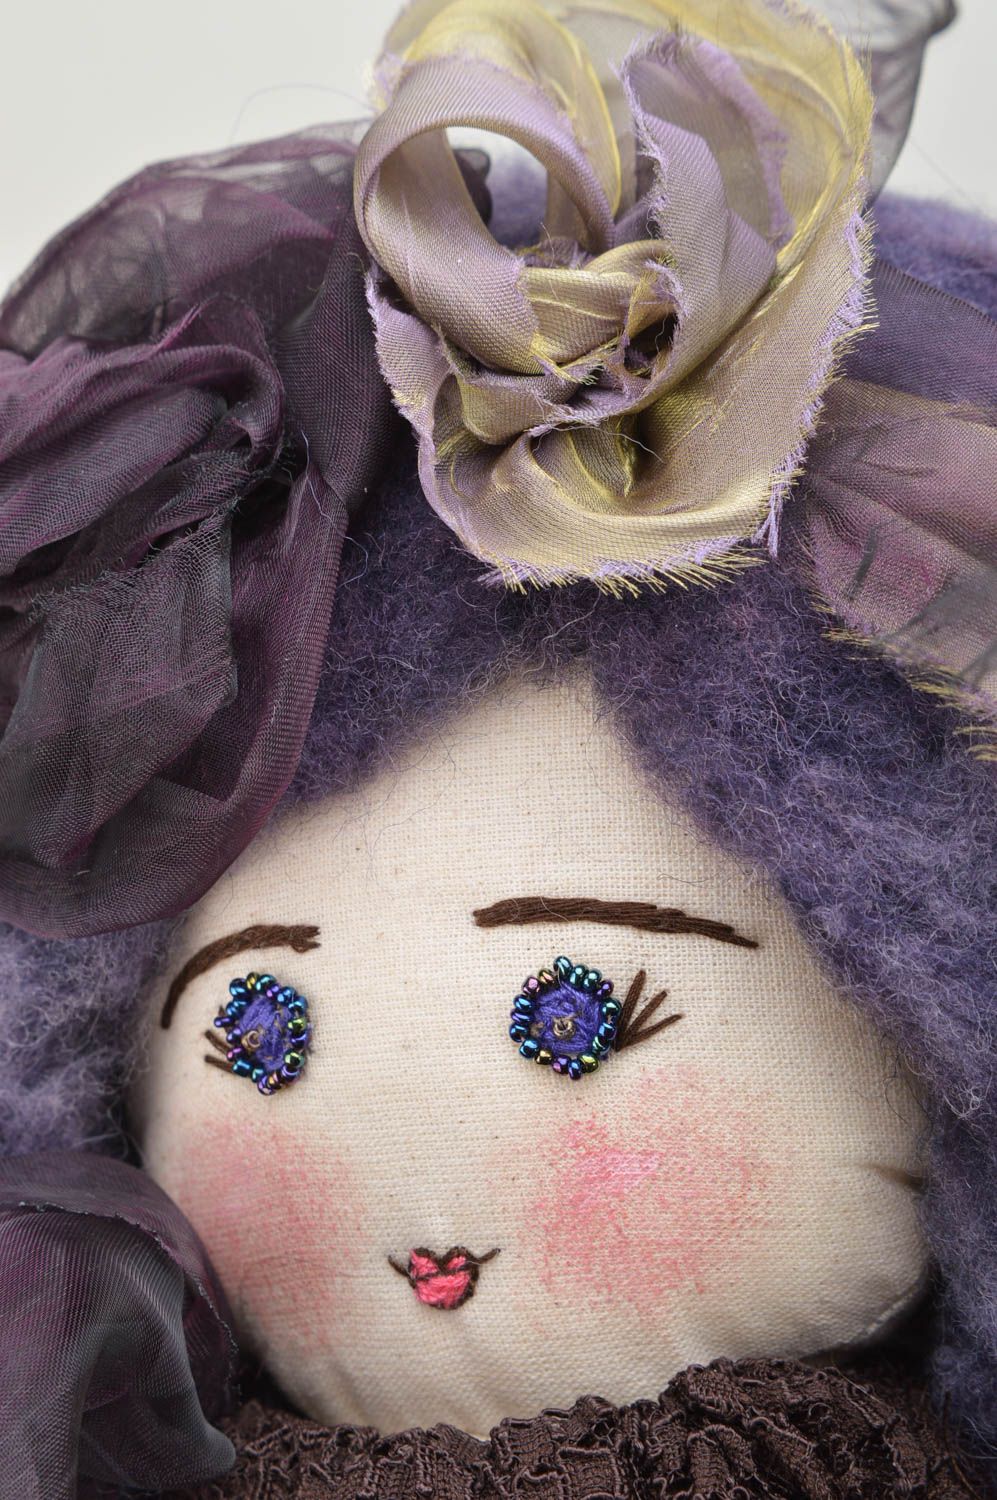 Handmade doll designer doll soft doll baby toy doll for kids gift ideas photo 2